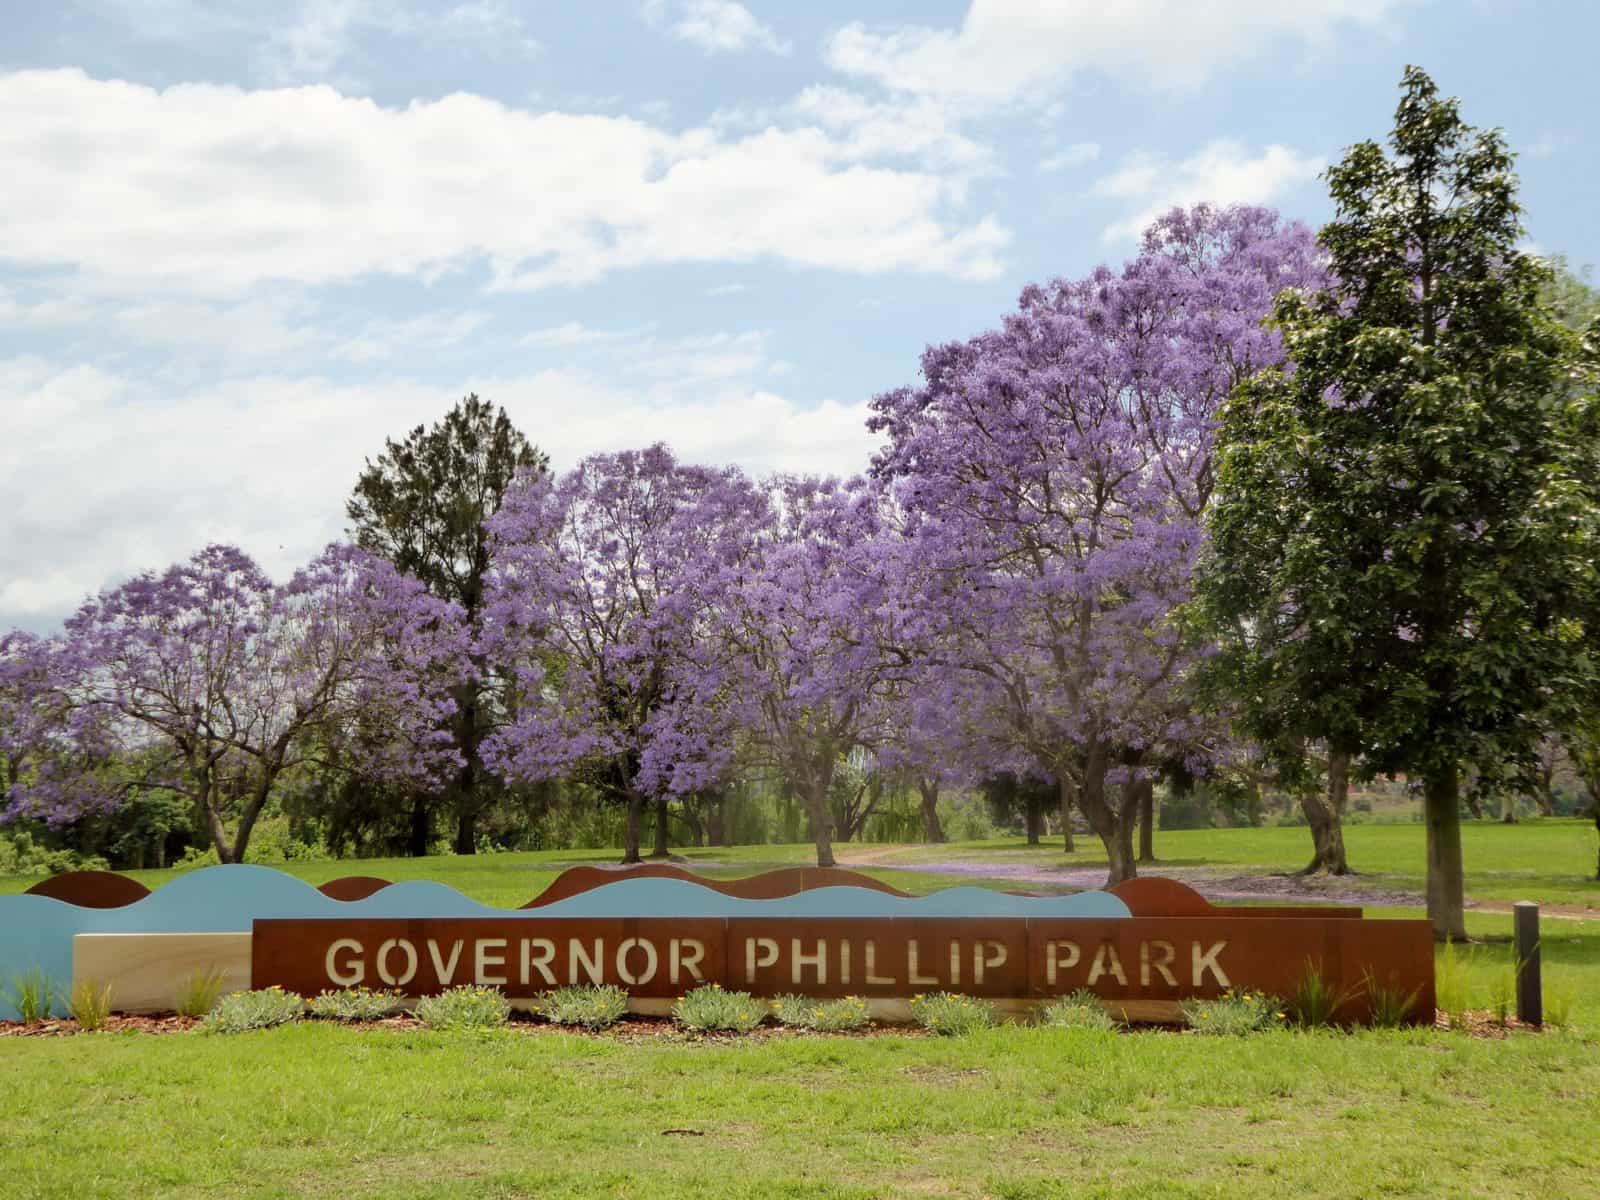 Governor Philip Park